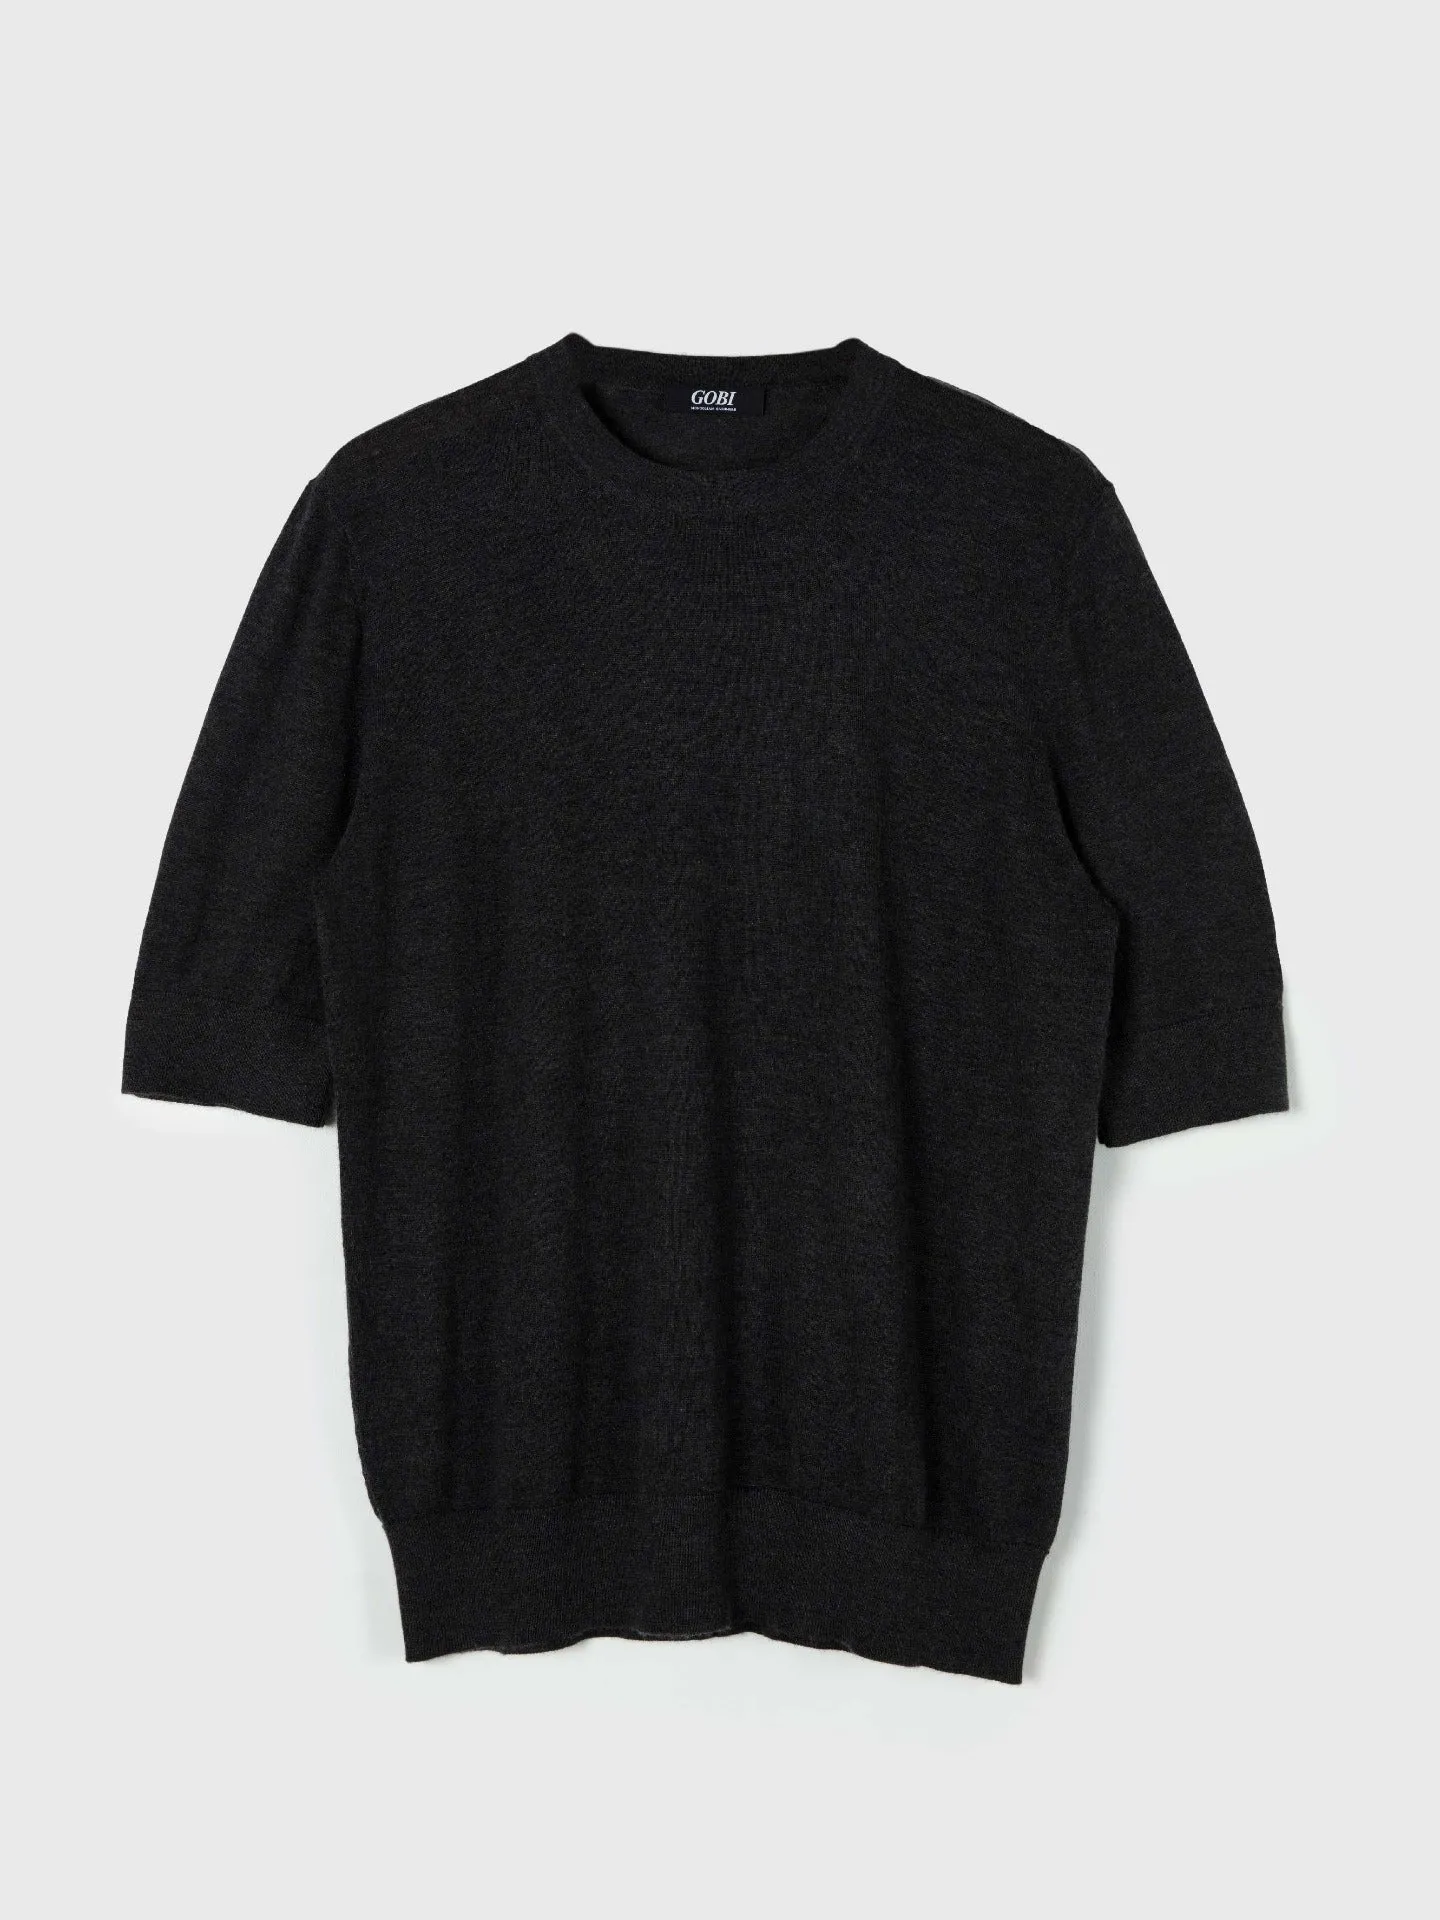 Men's Silk Cashmere T-Shirt charcoal - Gobi Cashmere